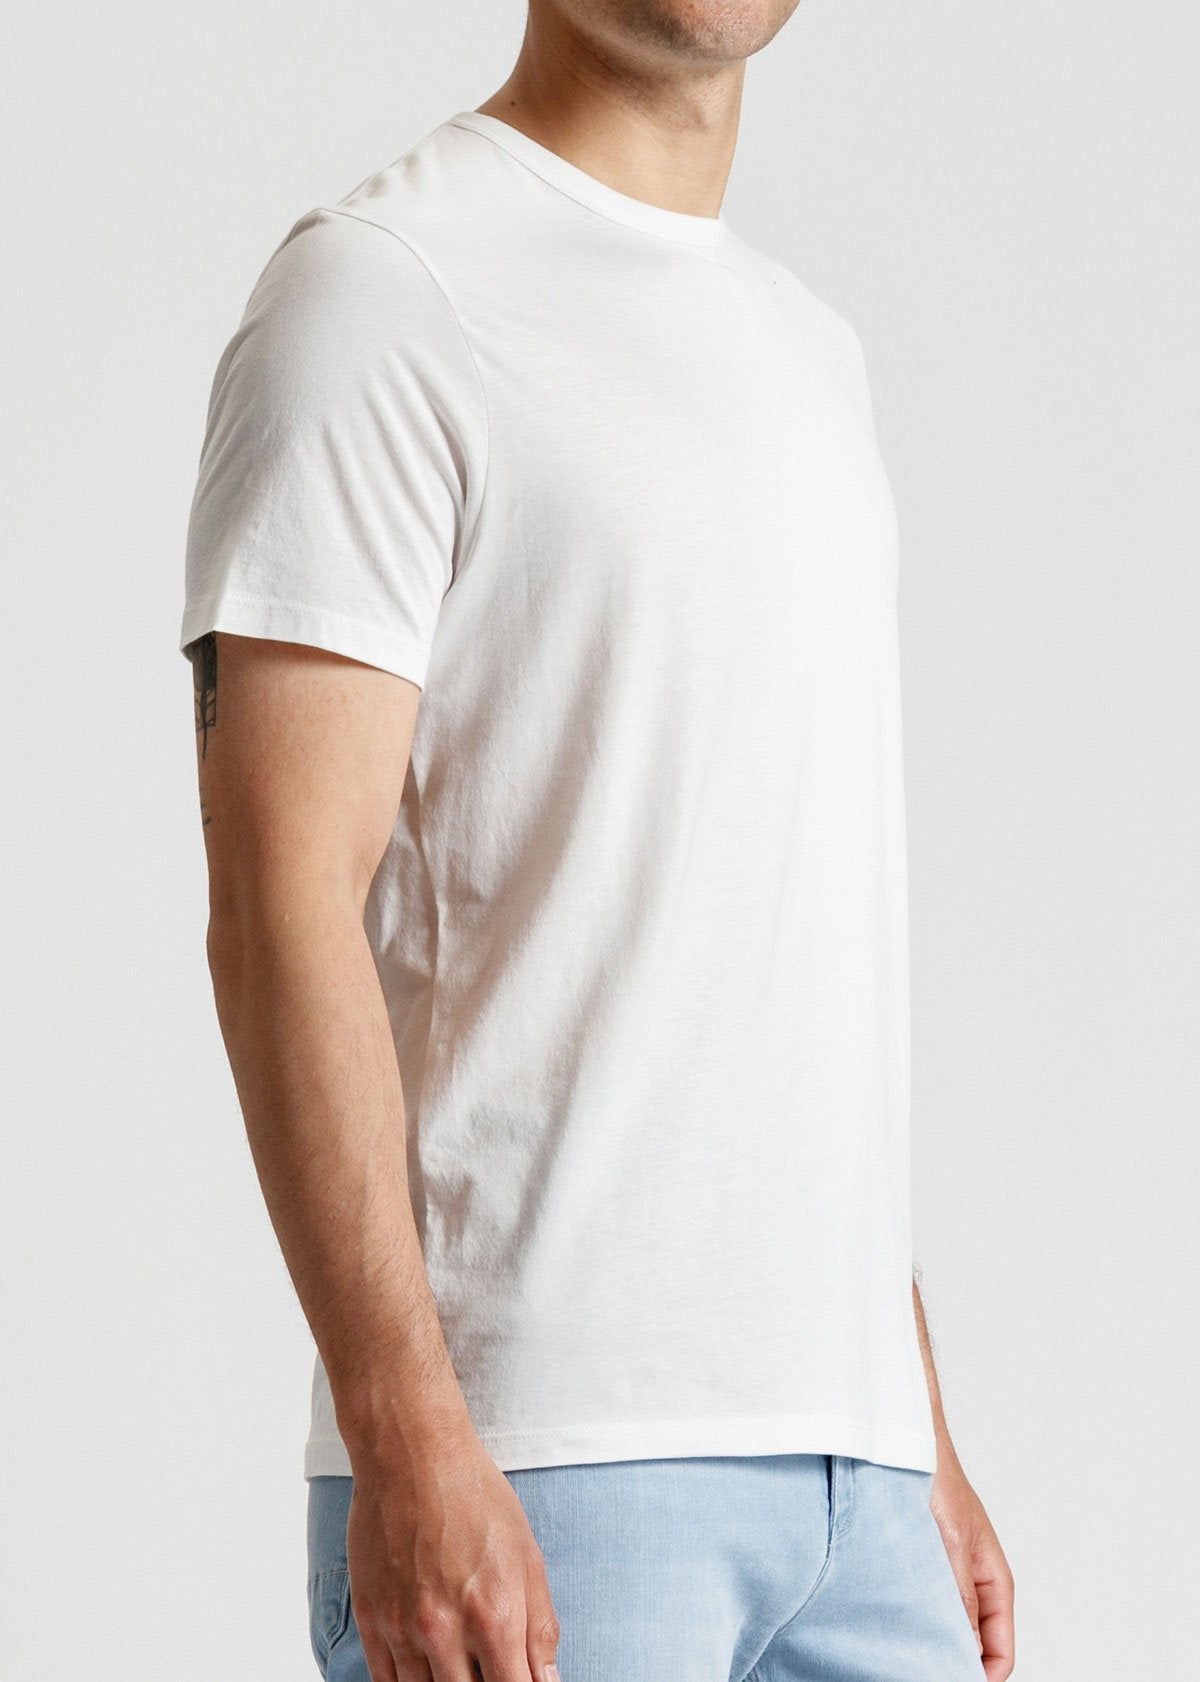 mens soft lightweight t shirt white side